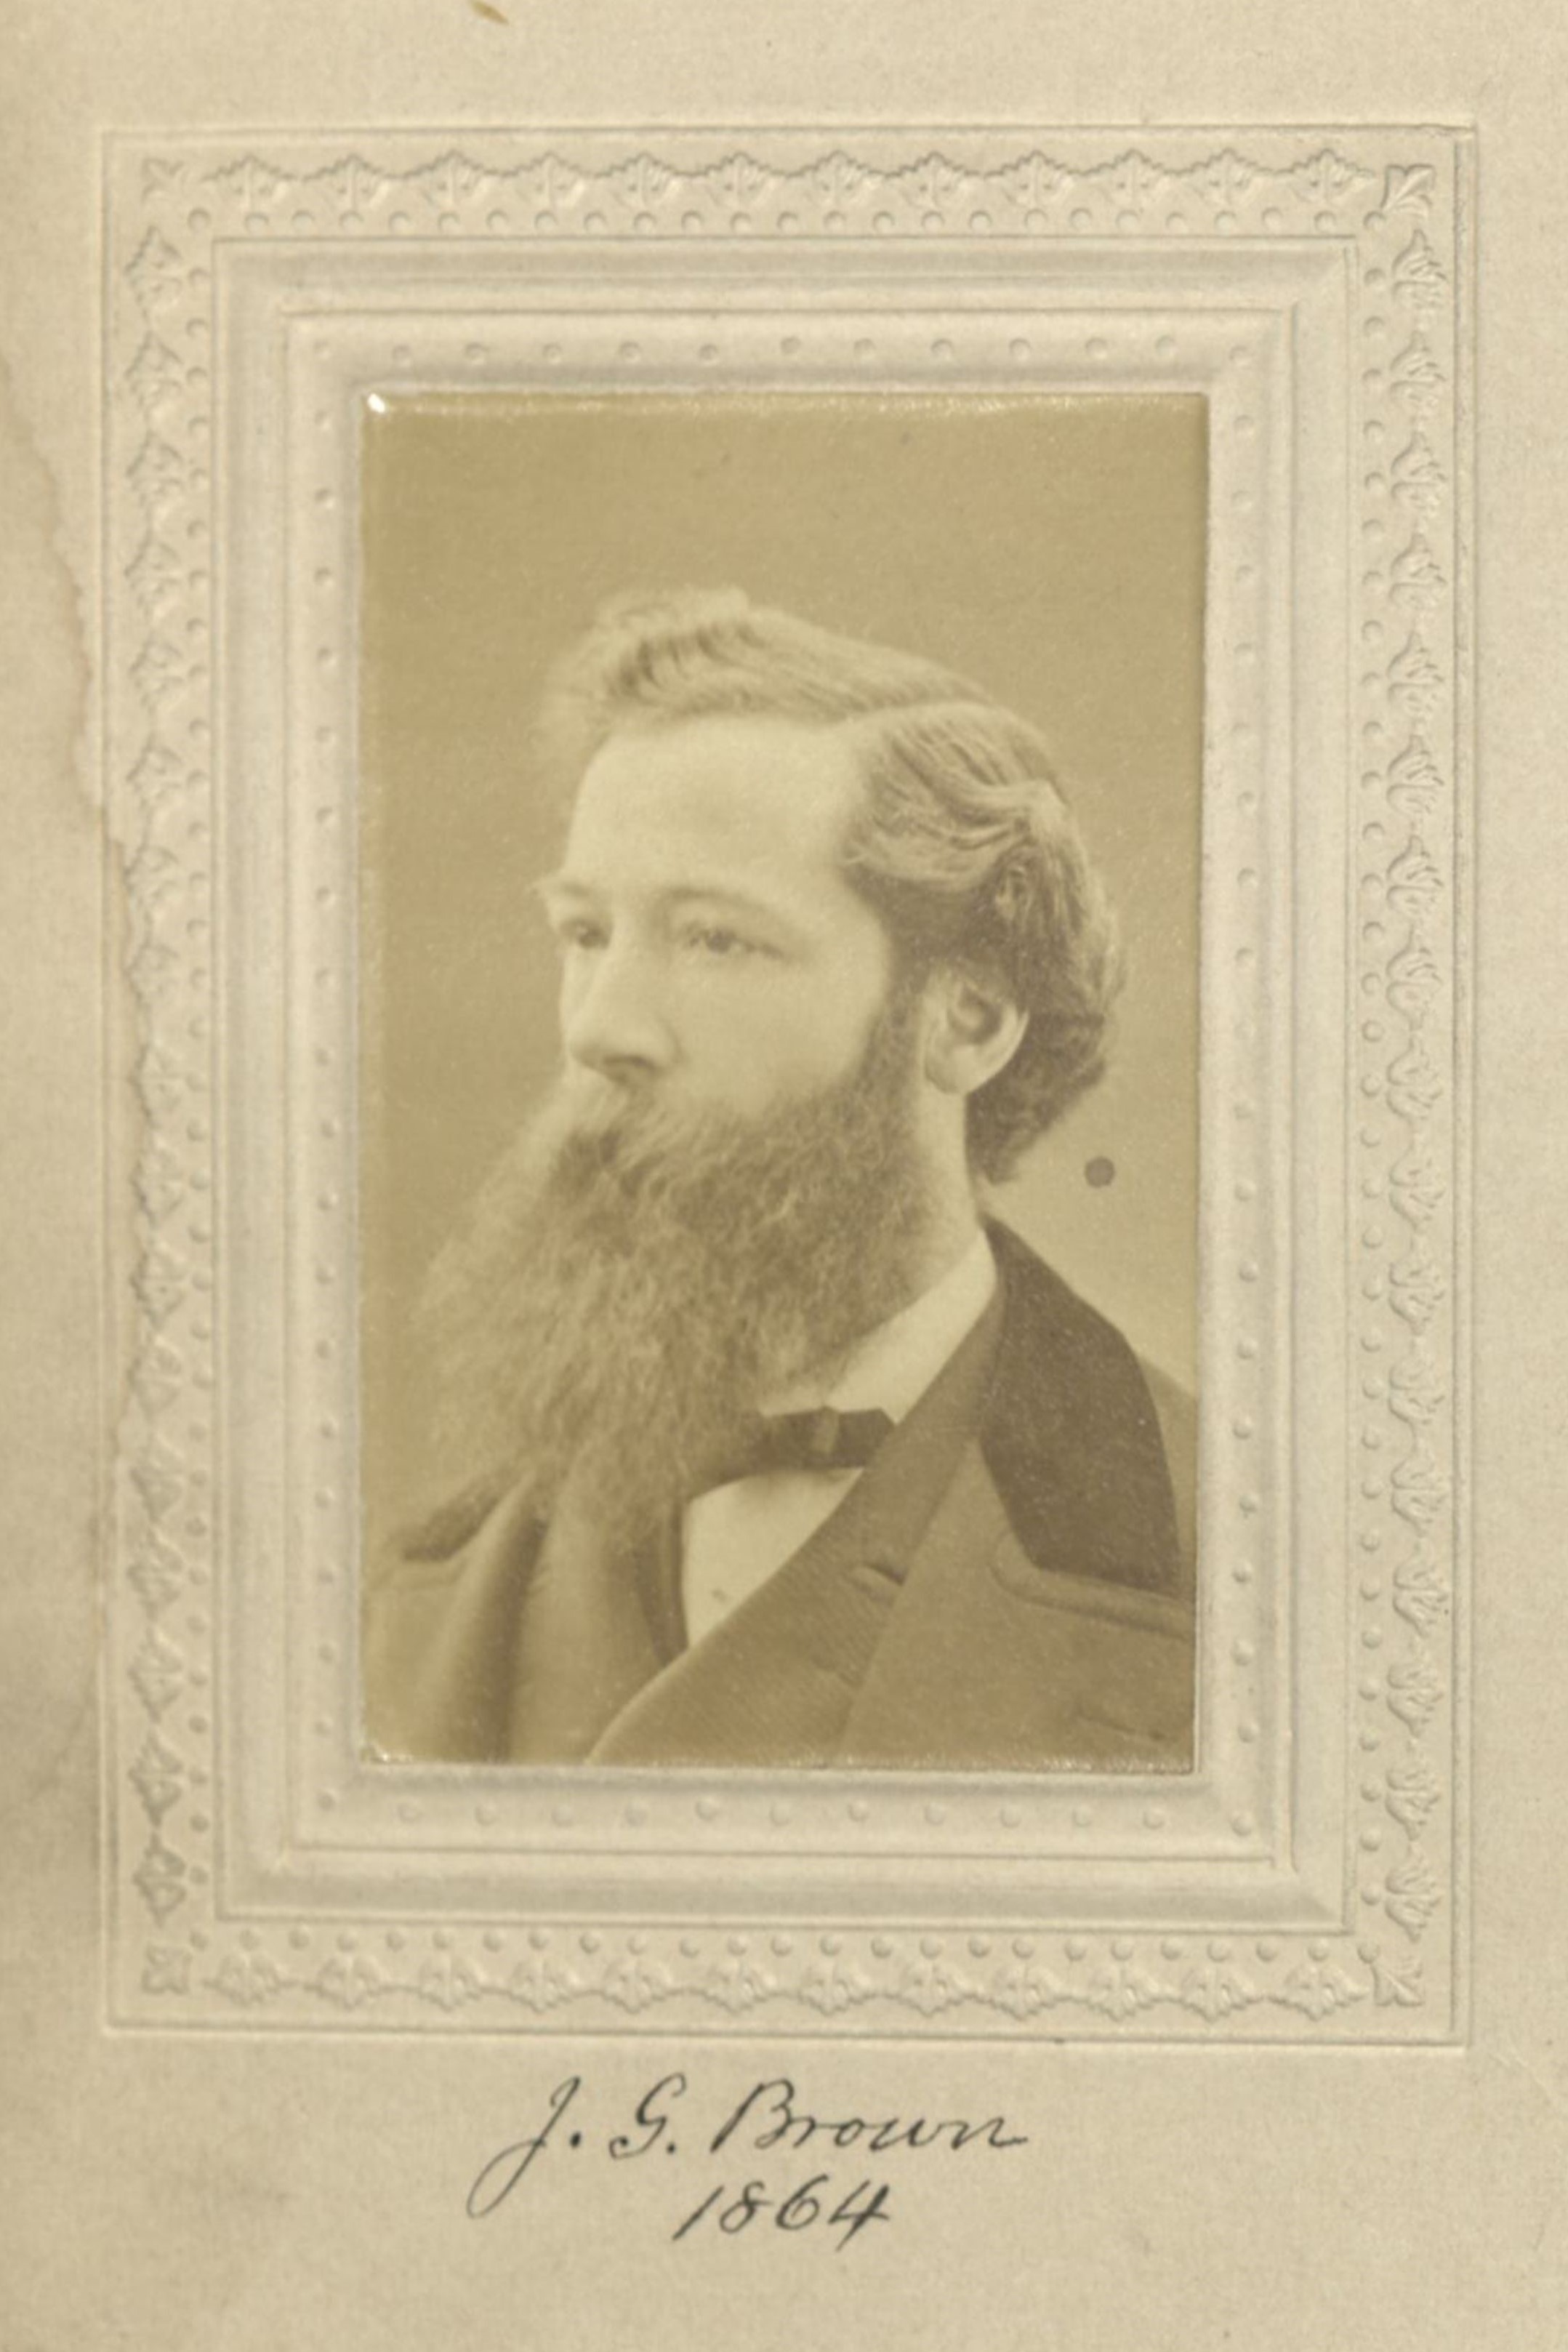 Member portrait of John G. Brown